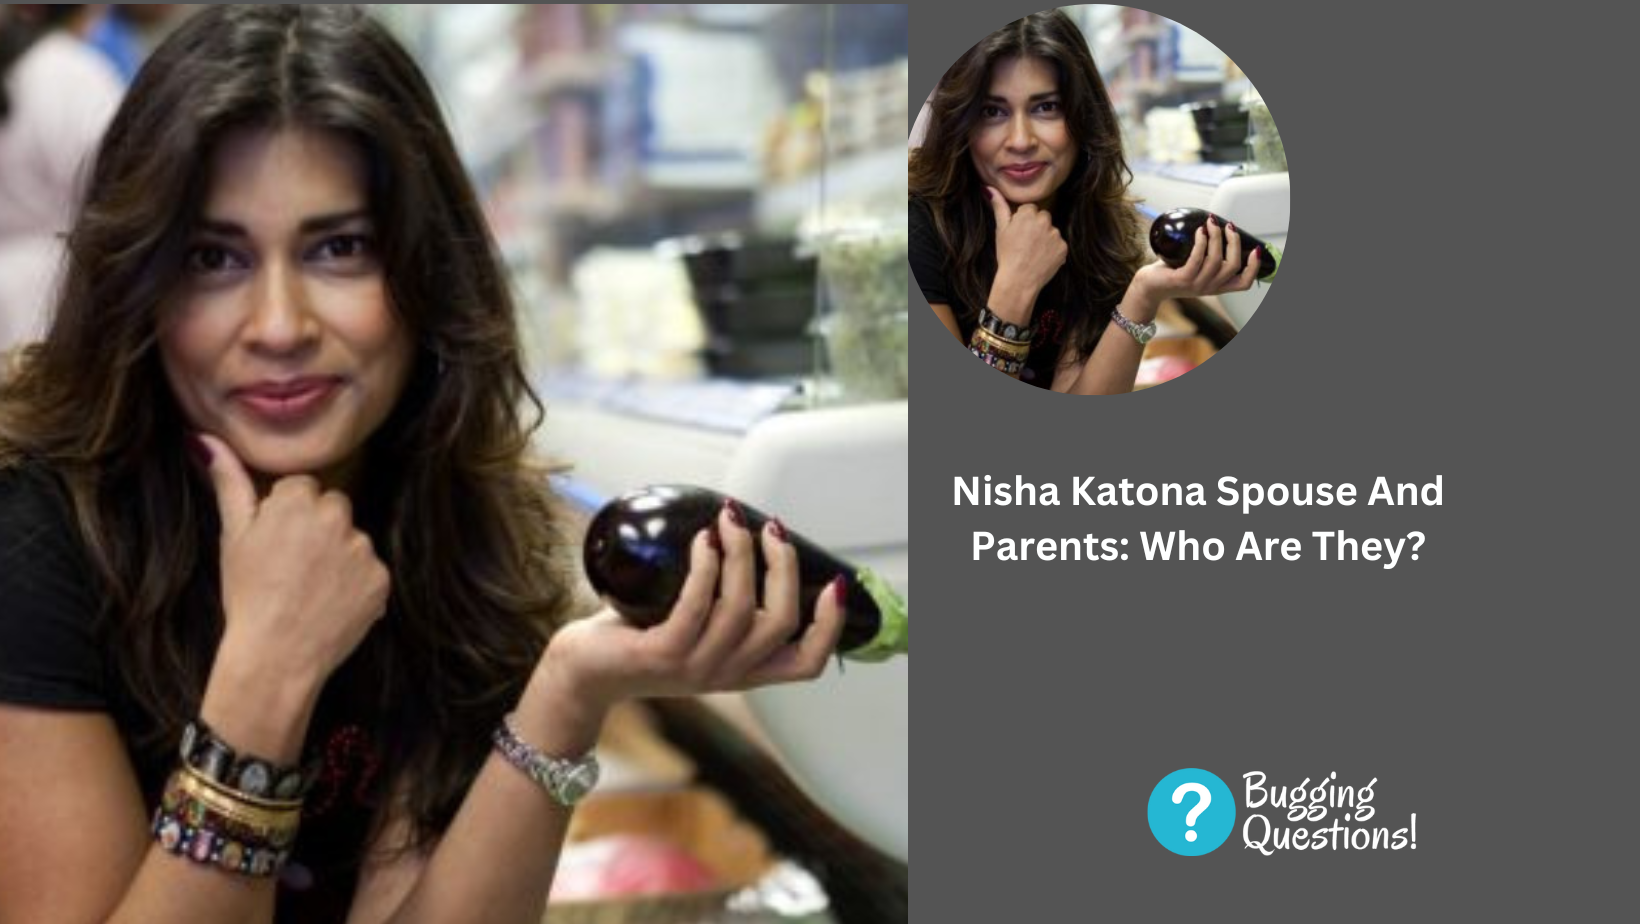 Nisha Katona Spouse And Parents: Who Are They?